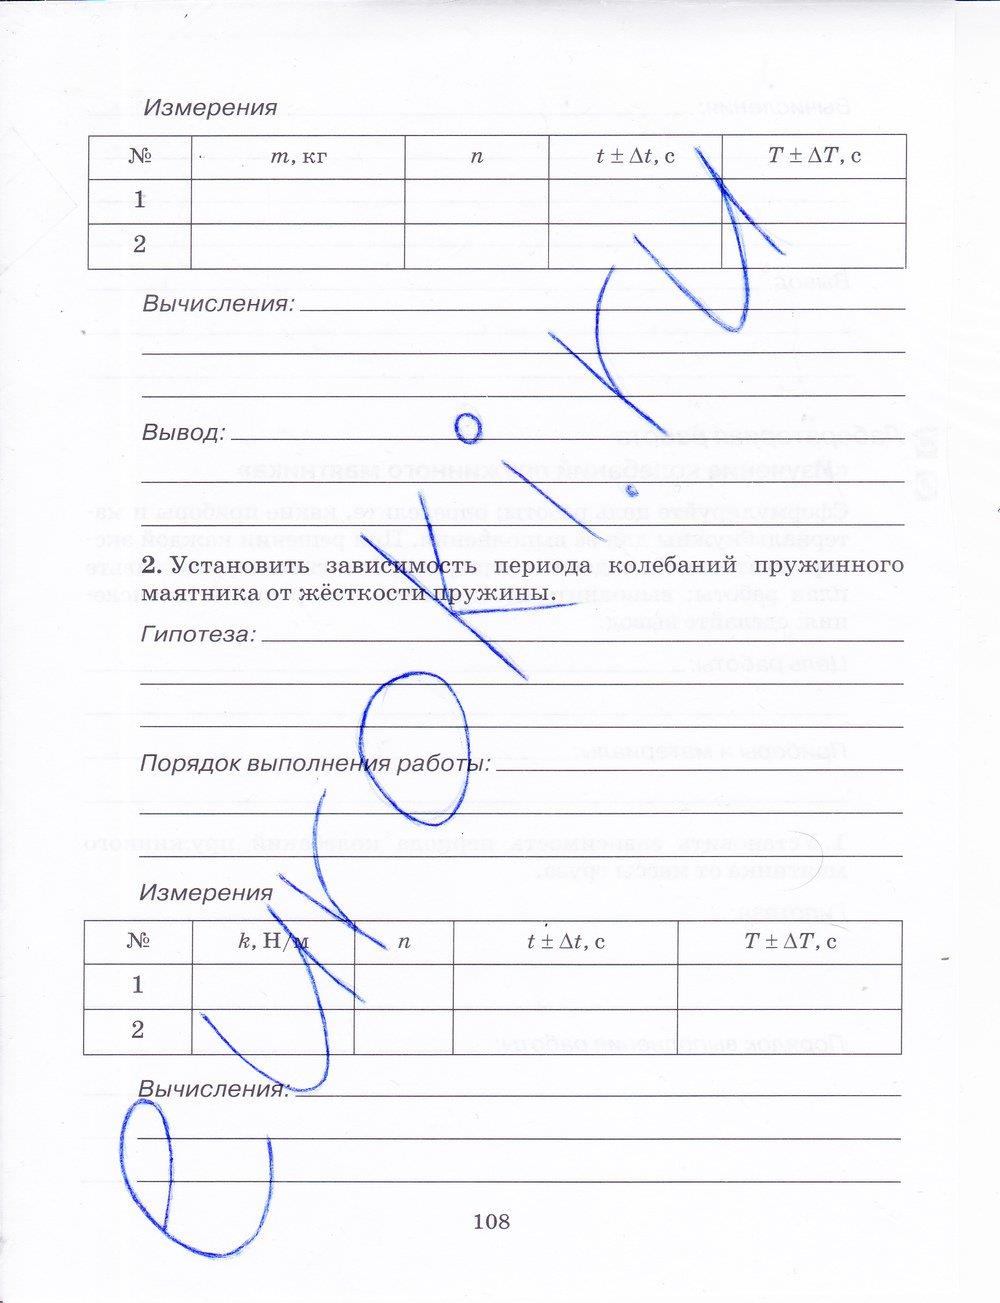 гдз 9 класс рабочая тетрадь страница 108 физика Пурышева, Важеевская, Чаругин